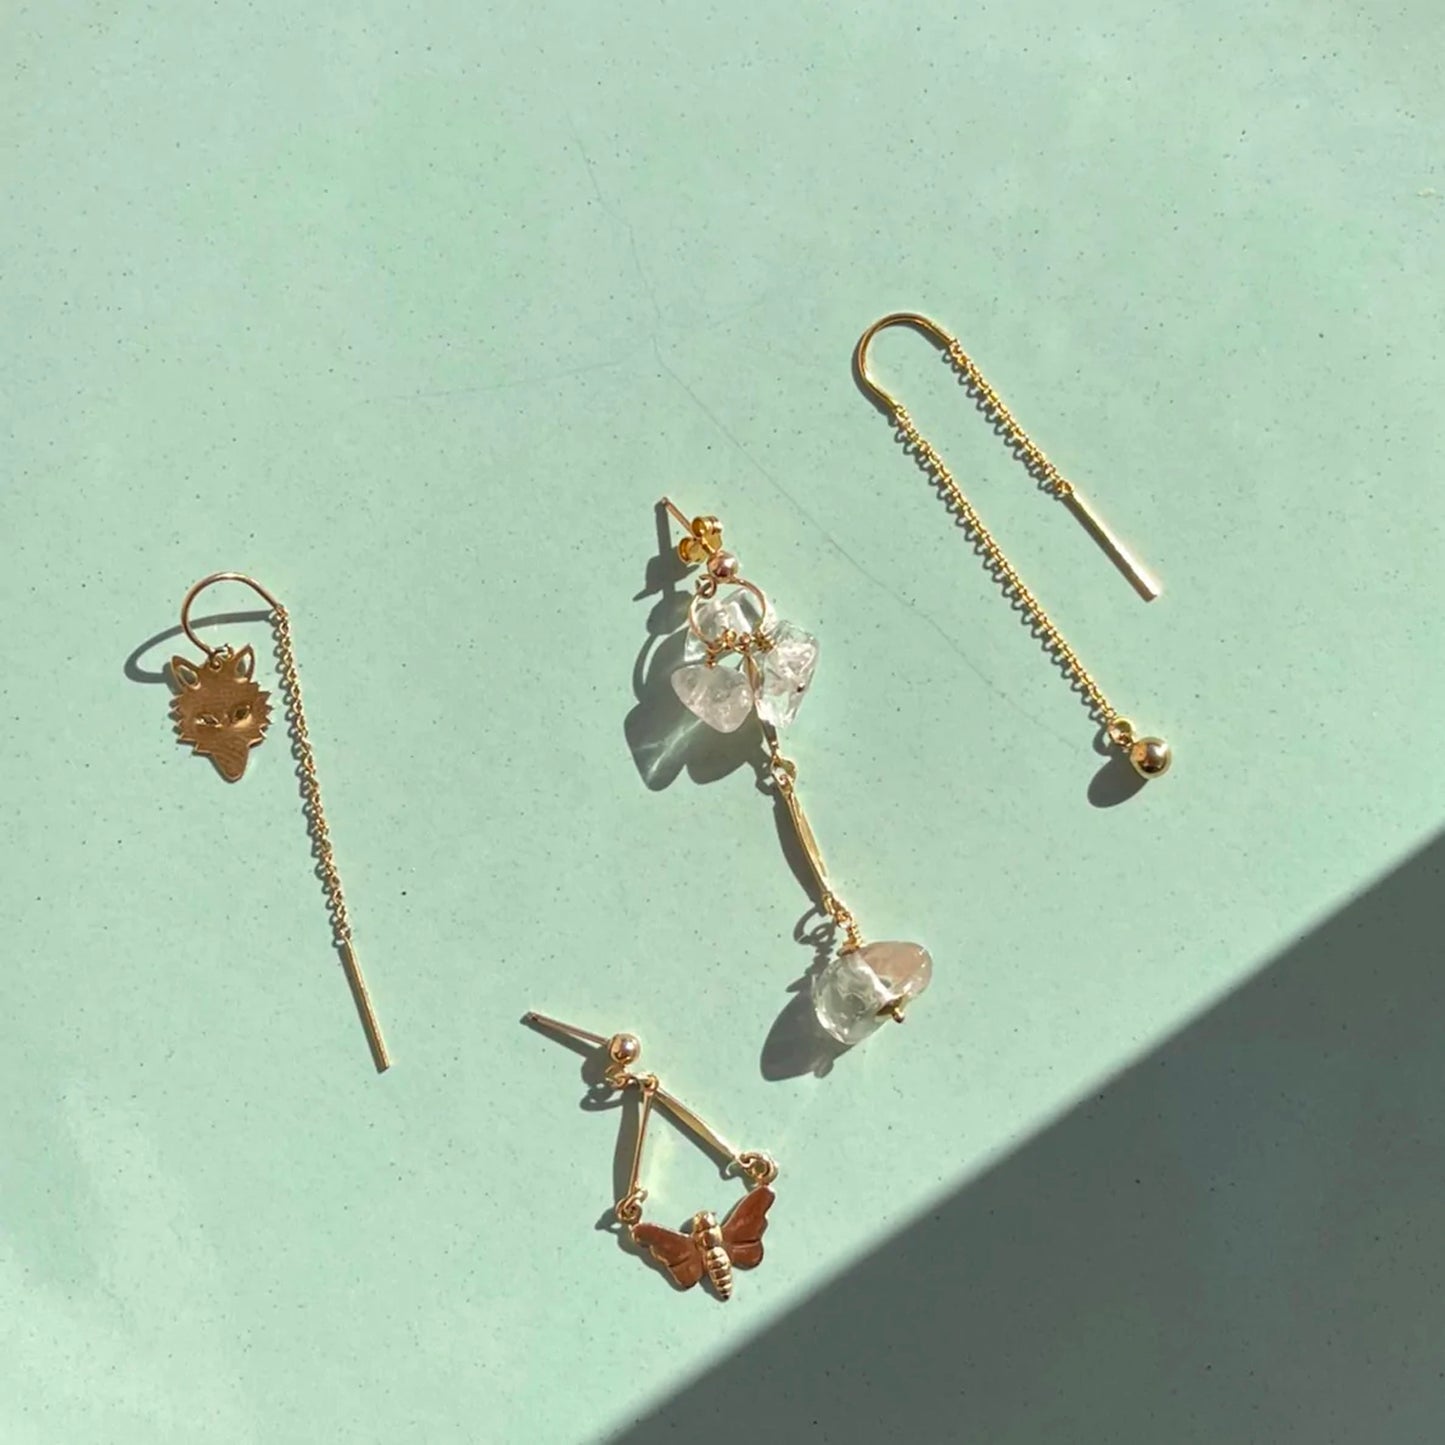 Petite Grand - Acqua Earrings - Gold